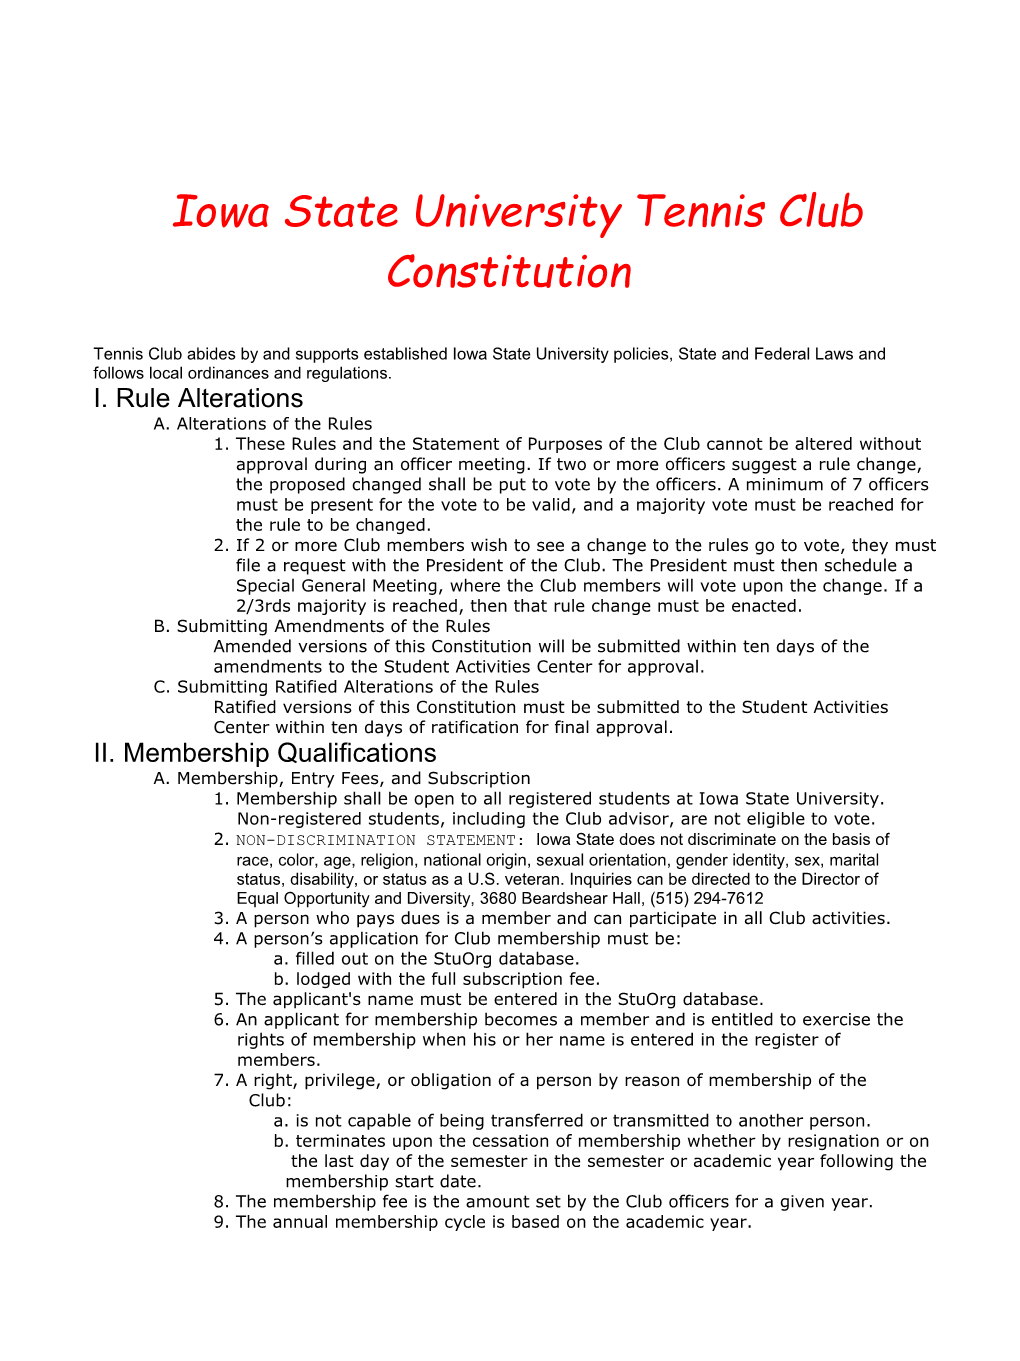 Iowa State University Tennis Club Constitution